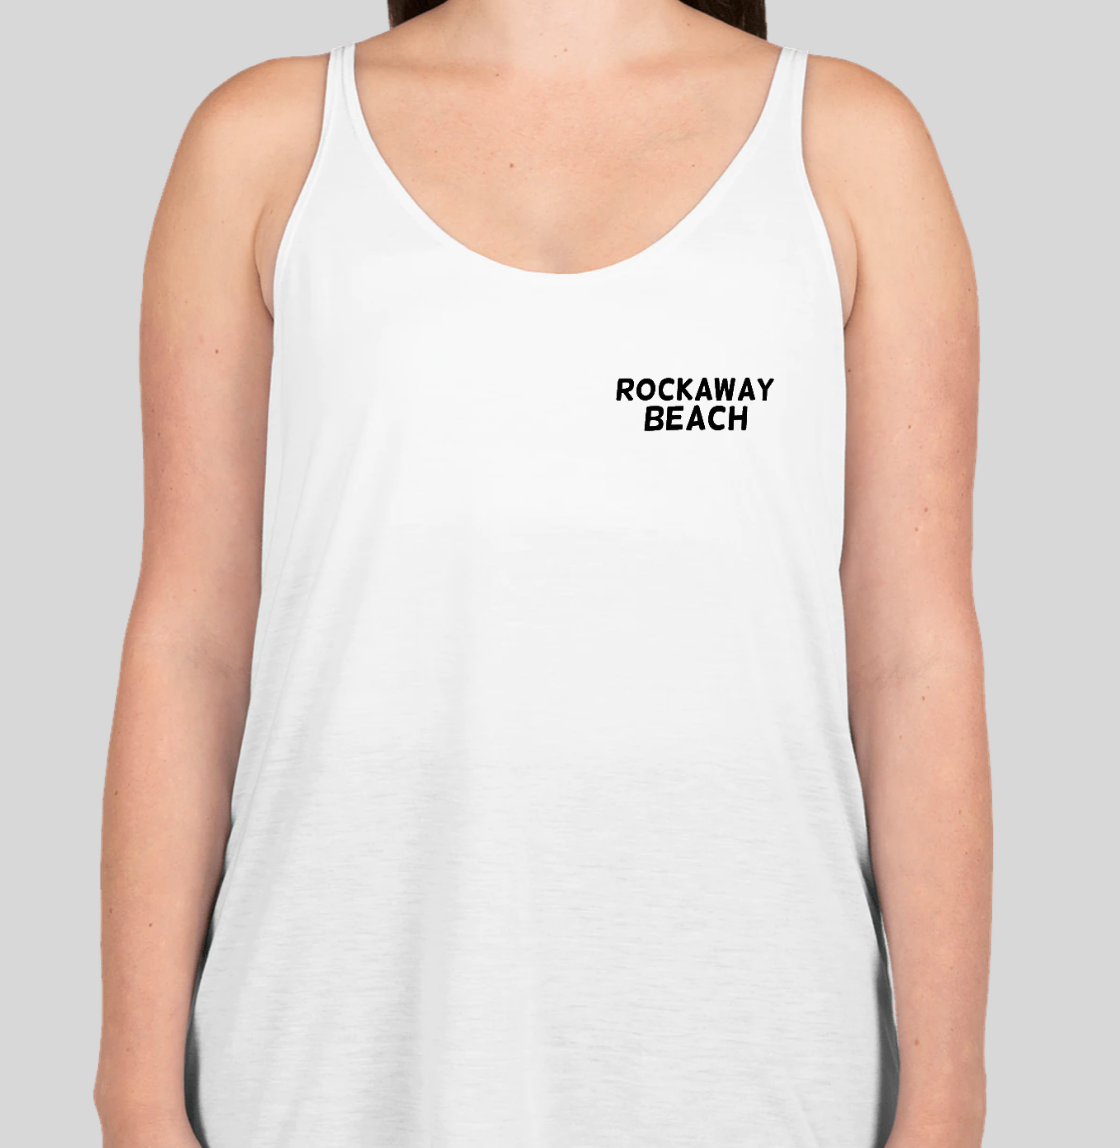 Official Rb logo battles championship roblox shirt,tank top, v-neck for men  and women